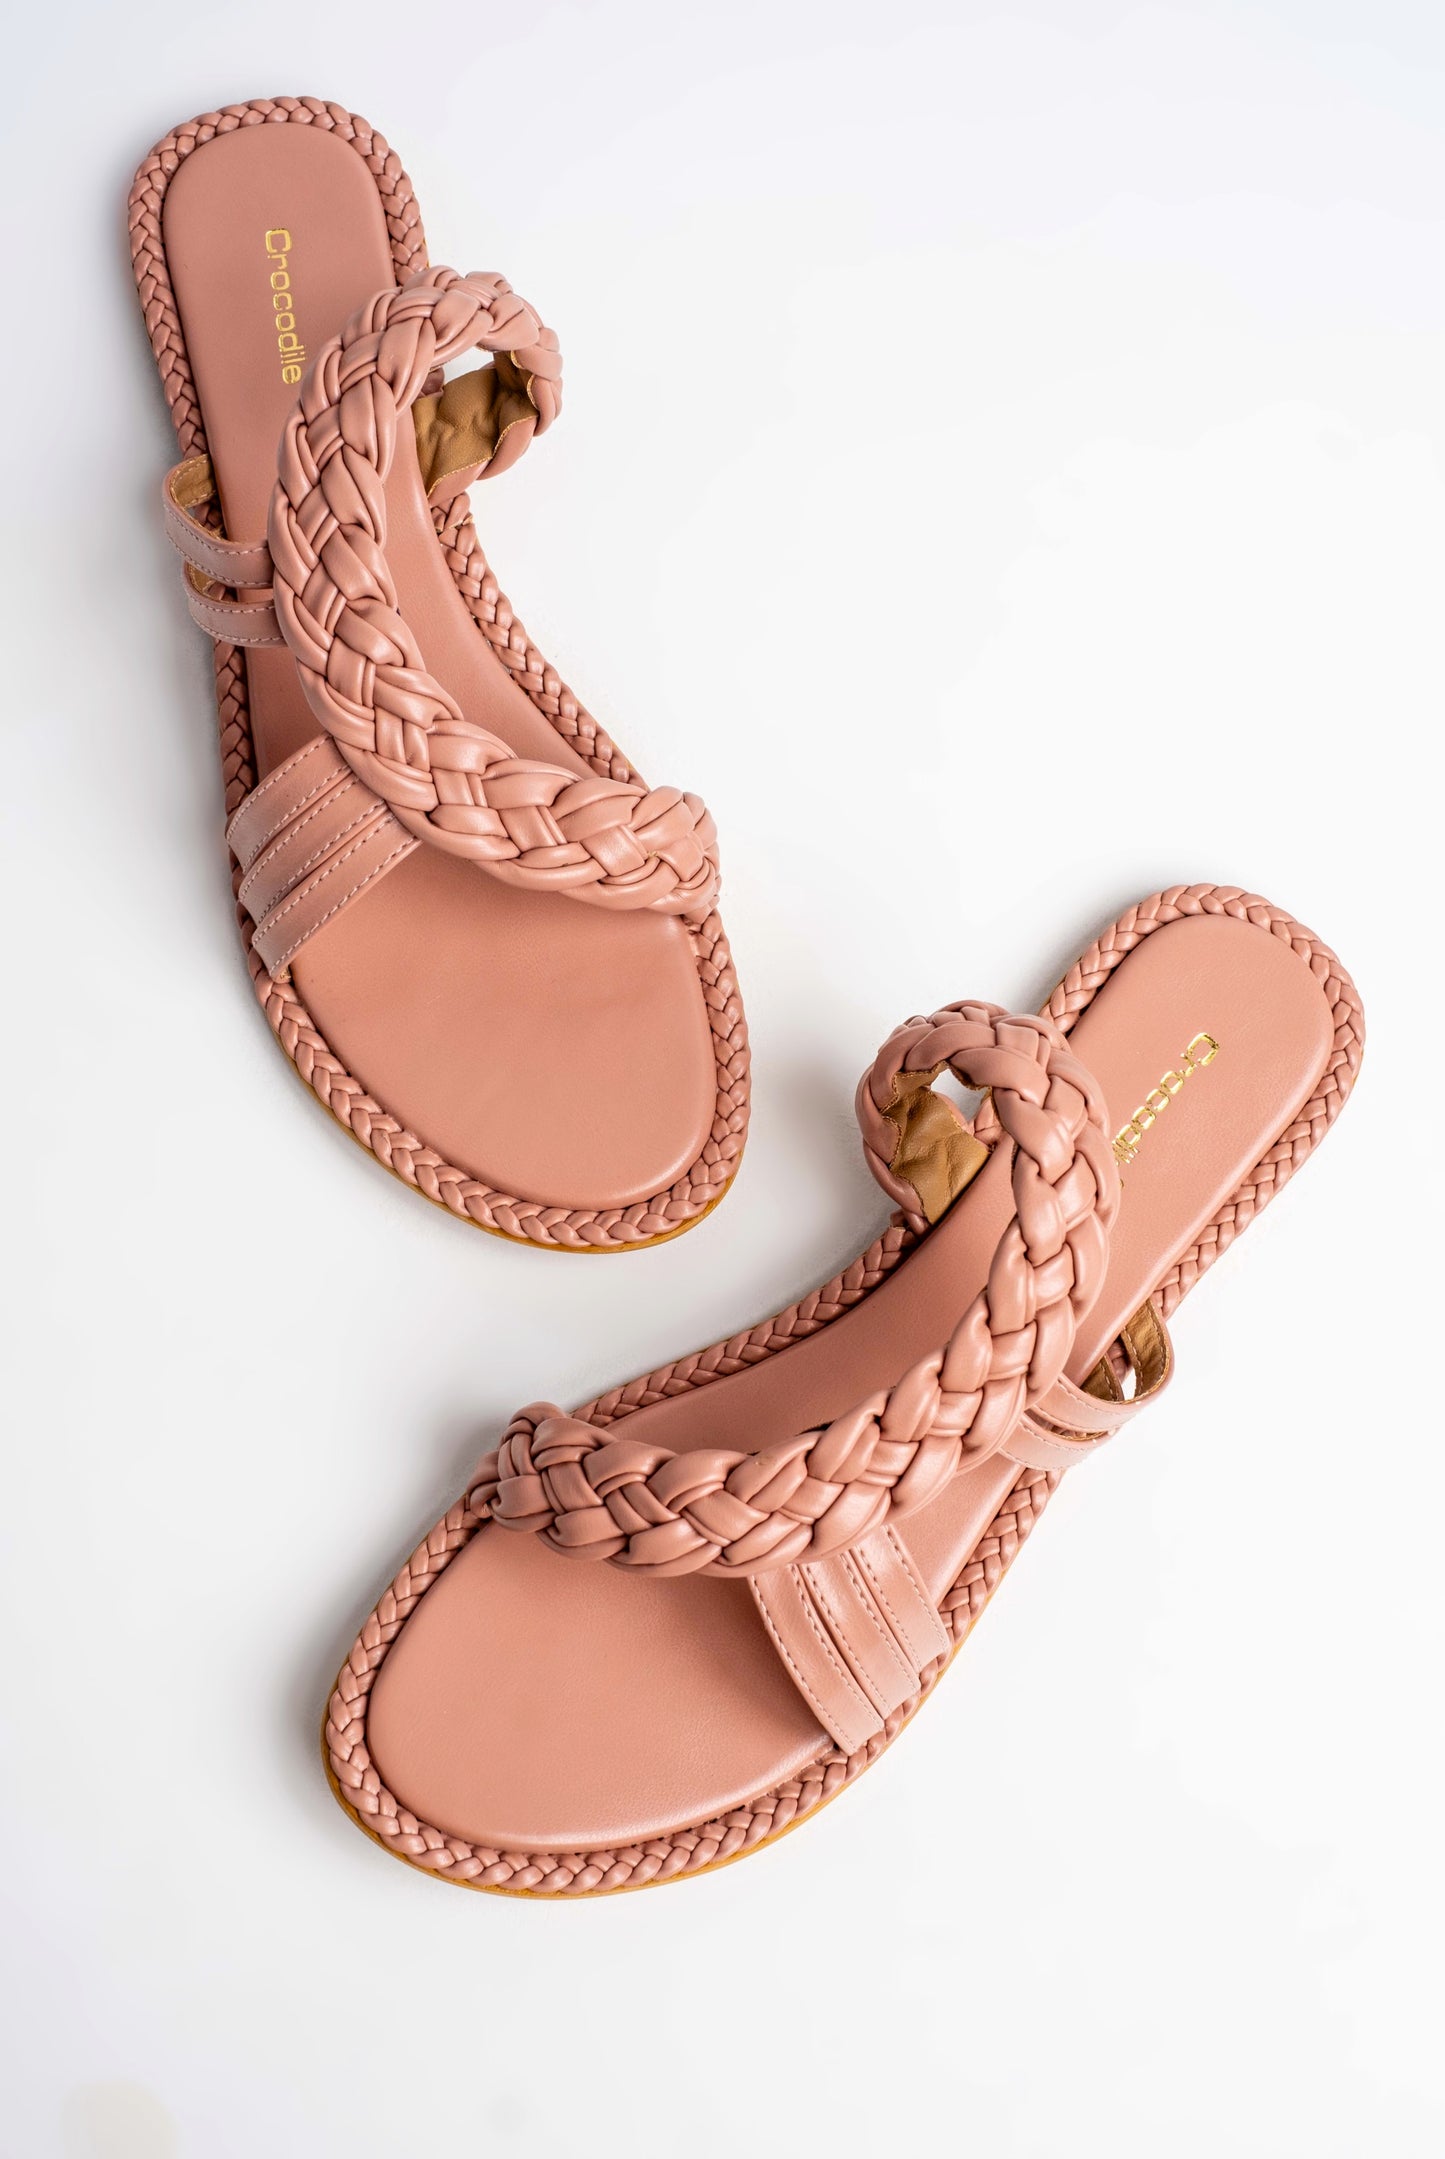 Isadora - Stylish Braided Strap Flats in Blush Pink